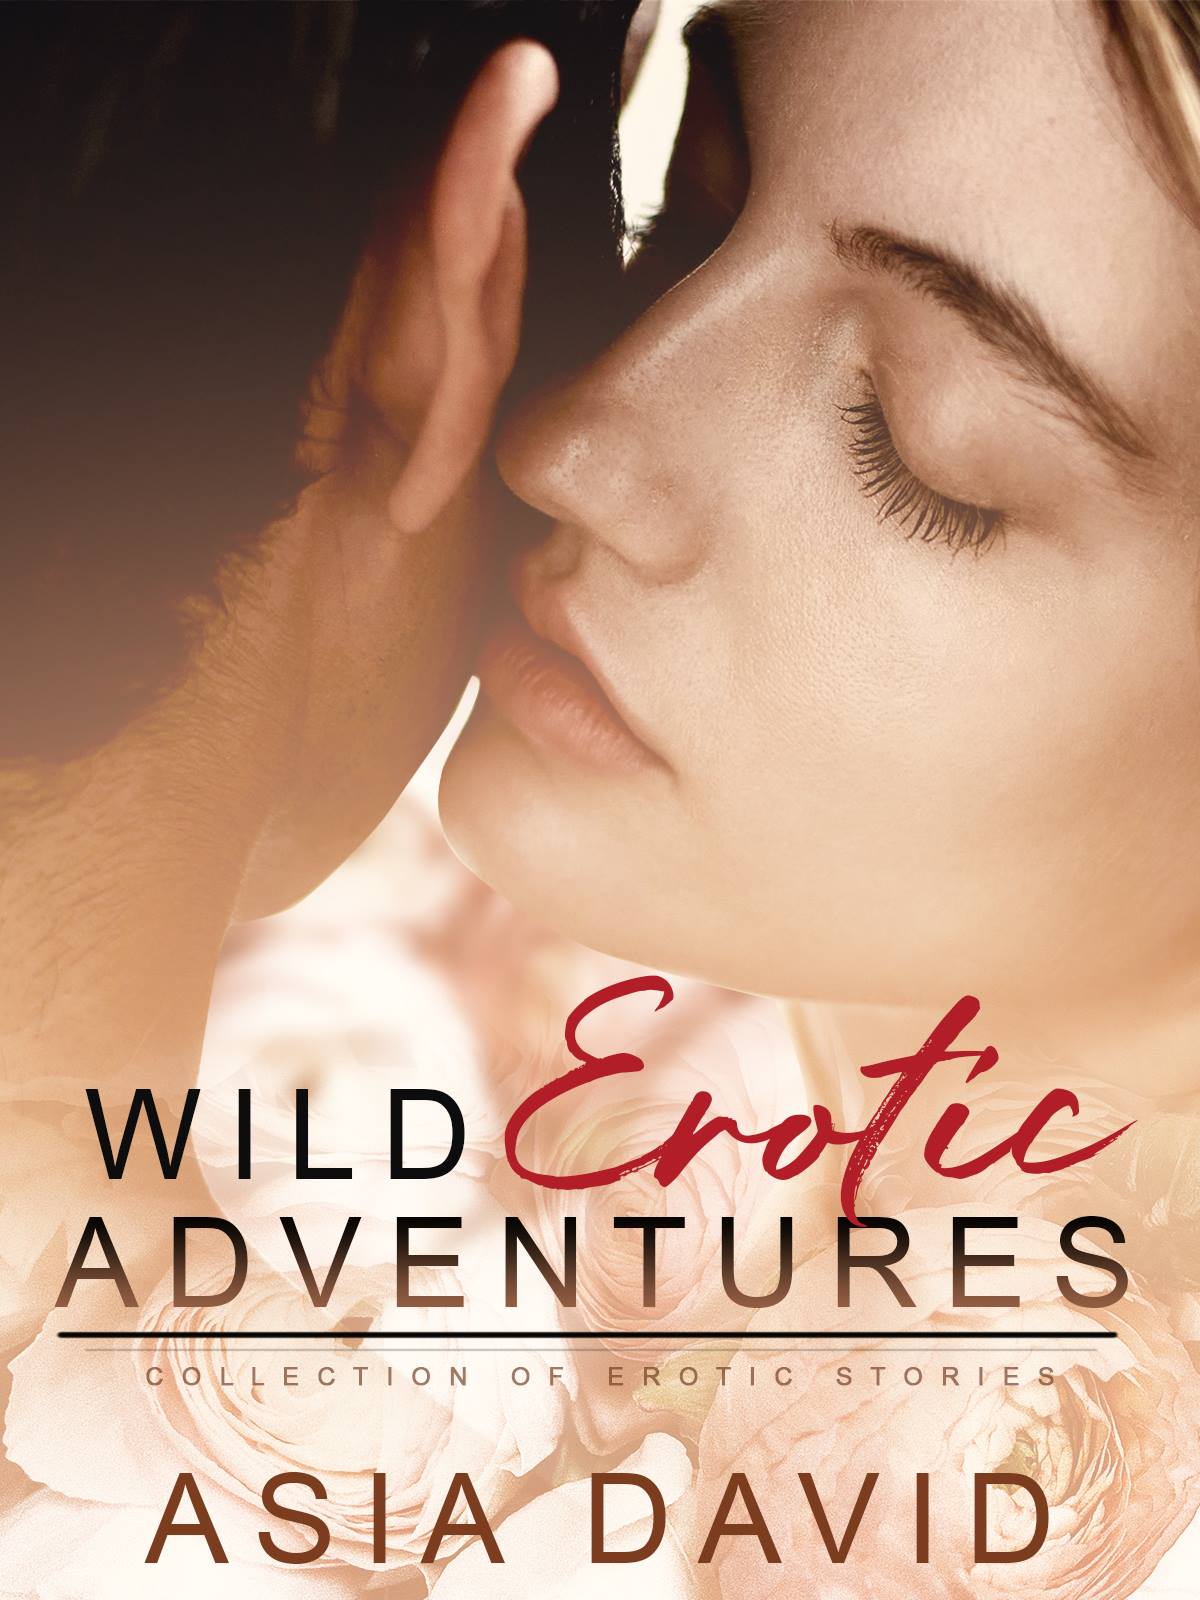 Wild Adventures By AsiaDavid | Libri